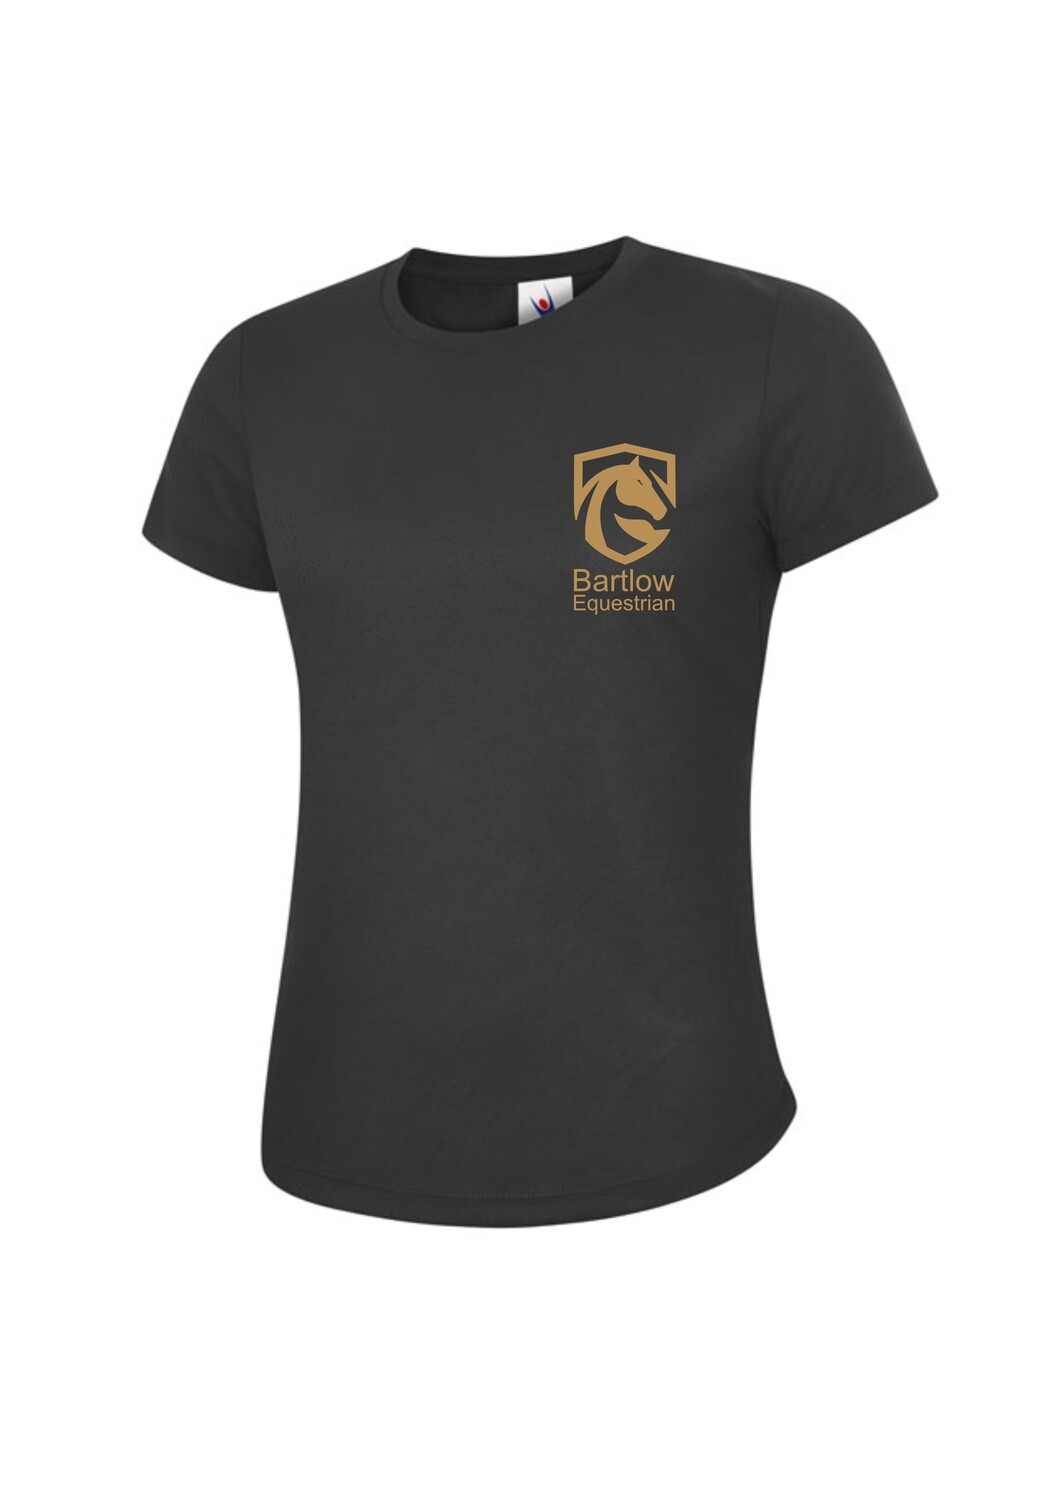 Bartlow Equestrian Ladies Fit T-Shirt